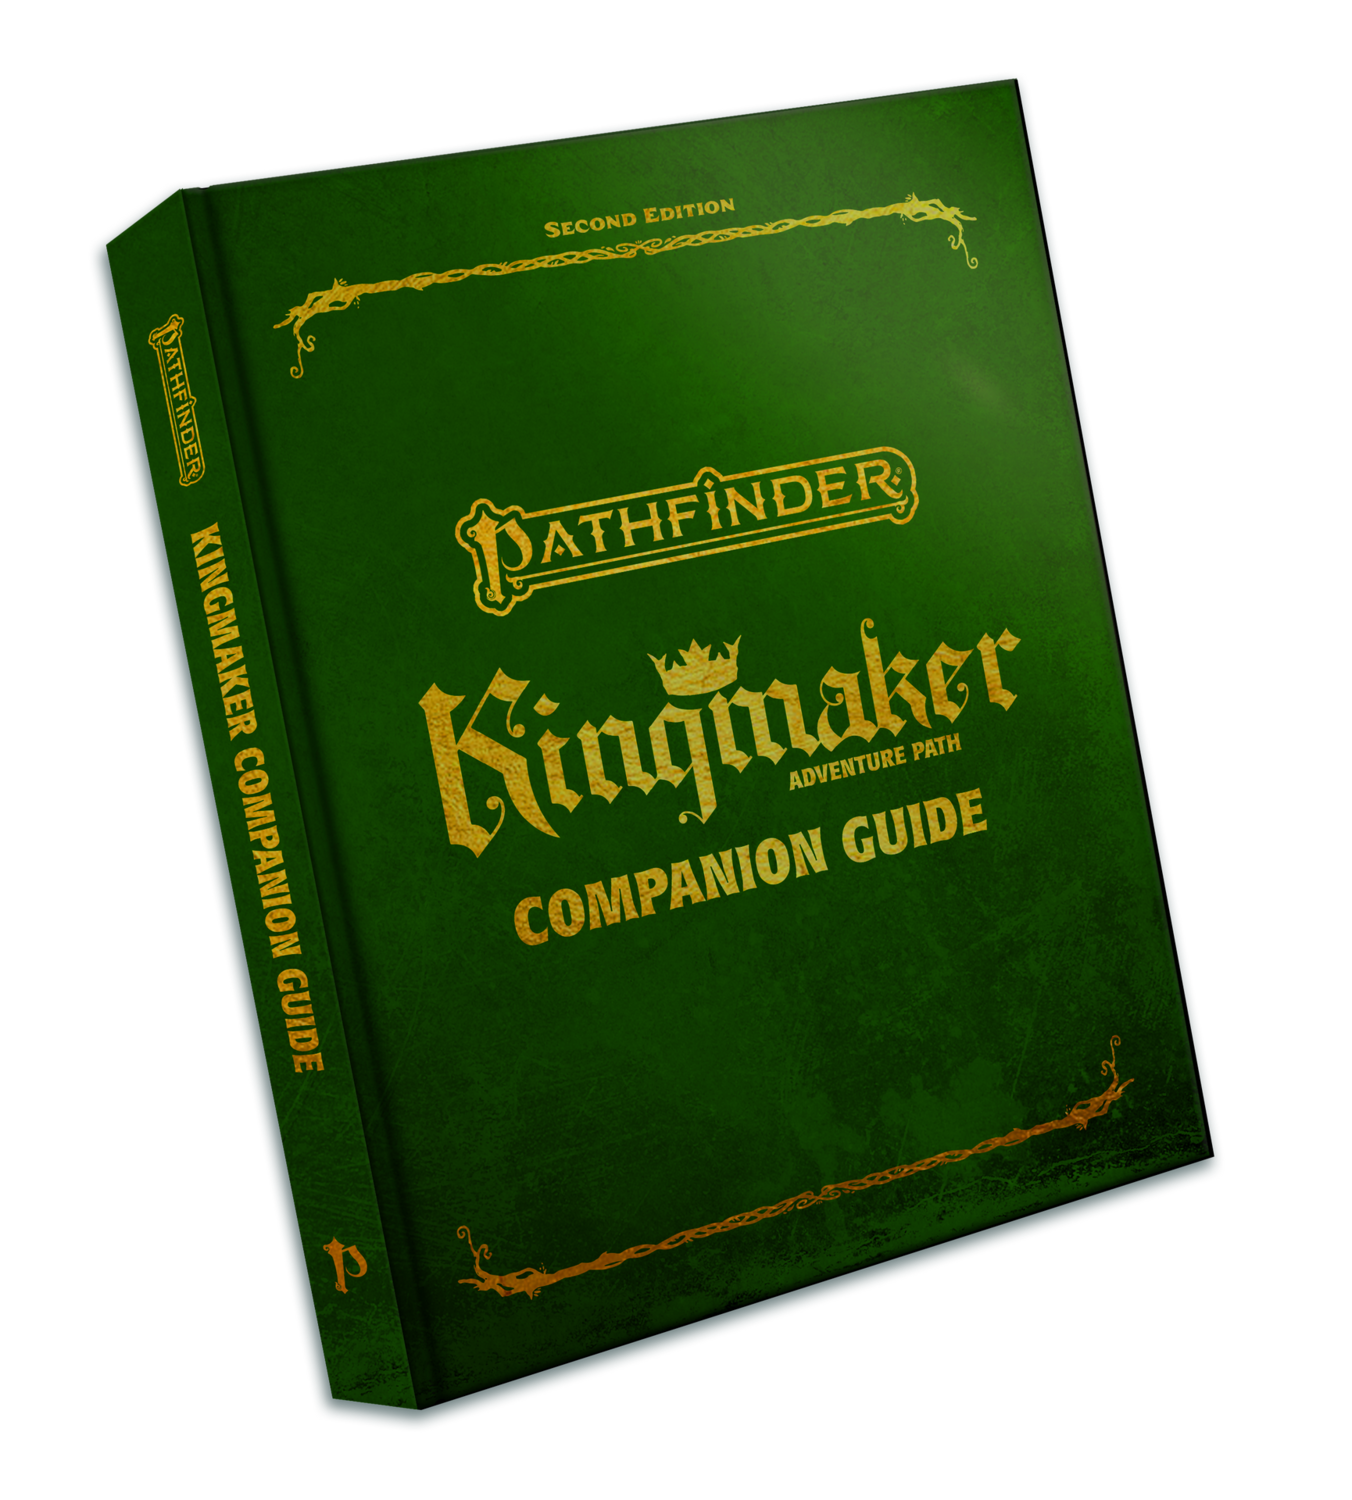 Kingmaker Companion Guide Special Edition